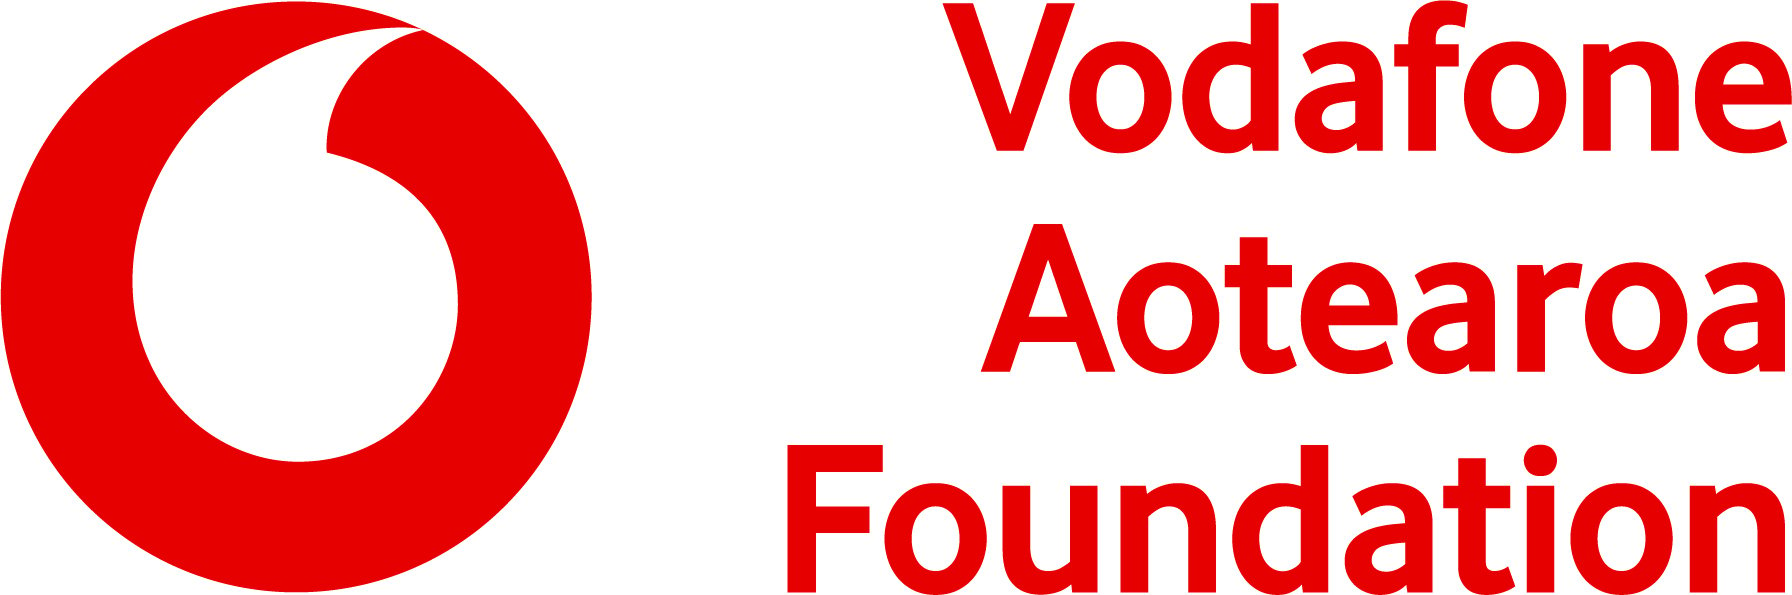 Vodafone Aotearoa Foundation - Quadrent